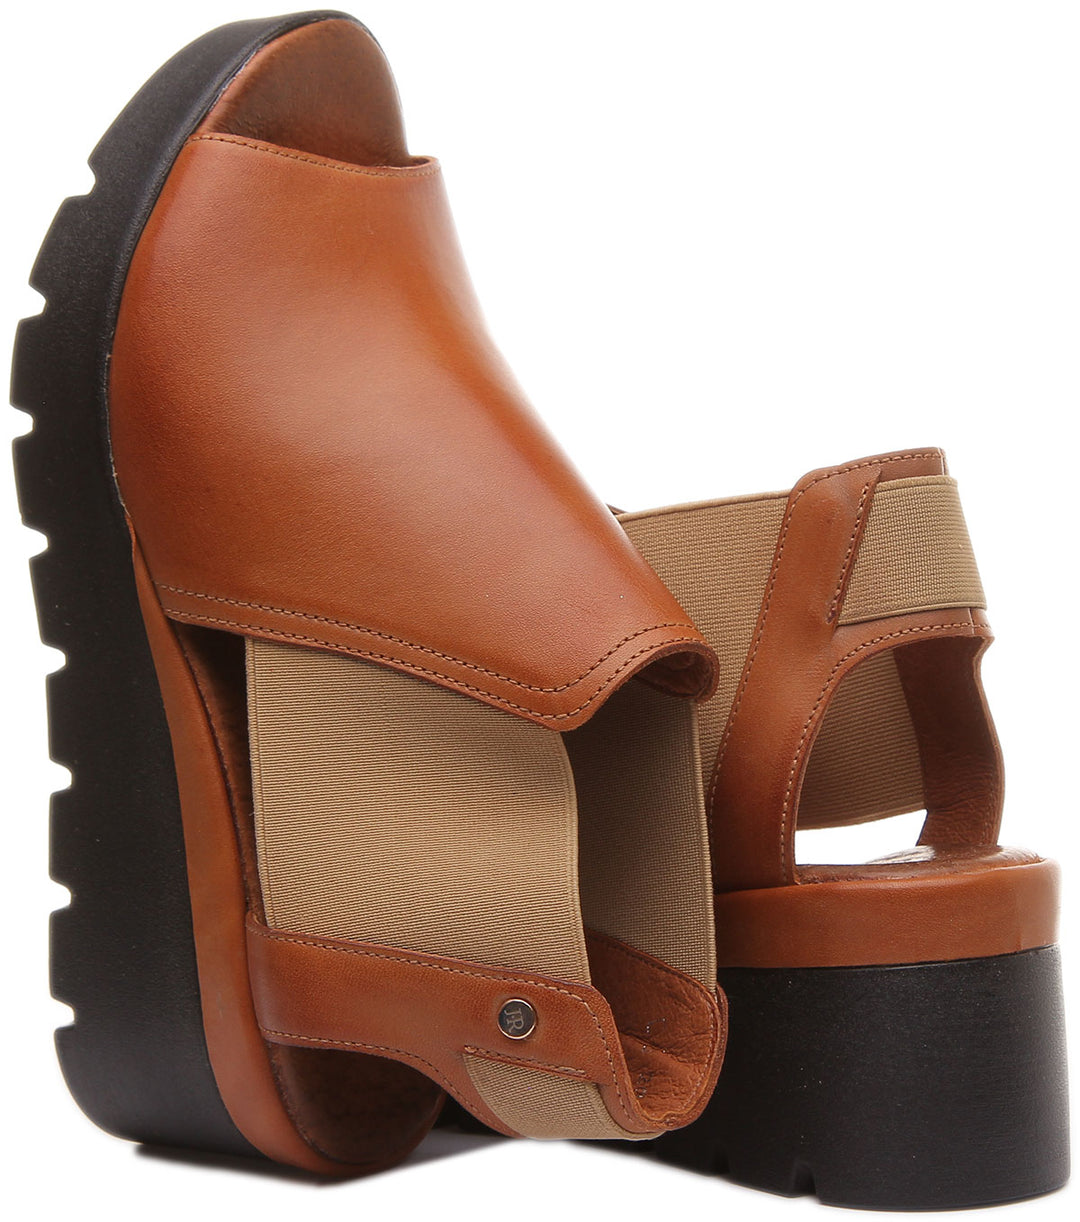 7100 Chelsea Style Comfort Sandal in Tan